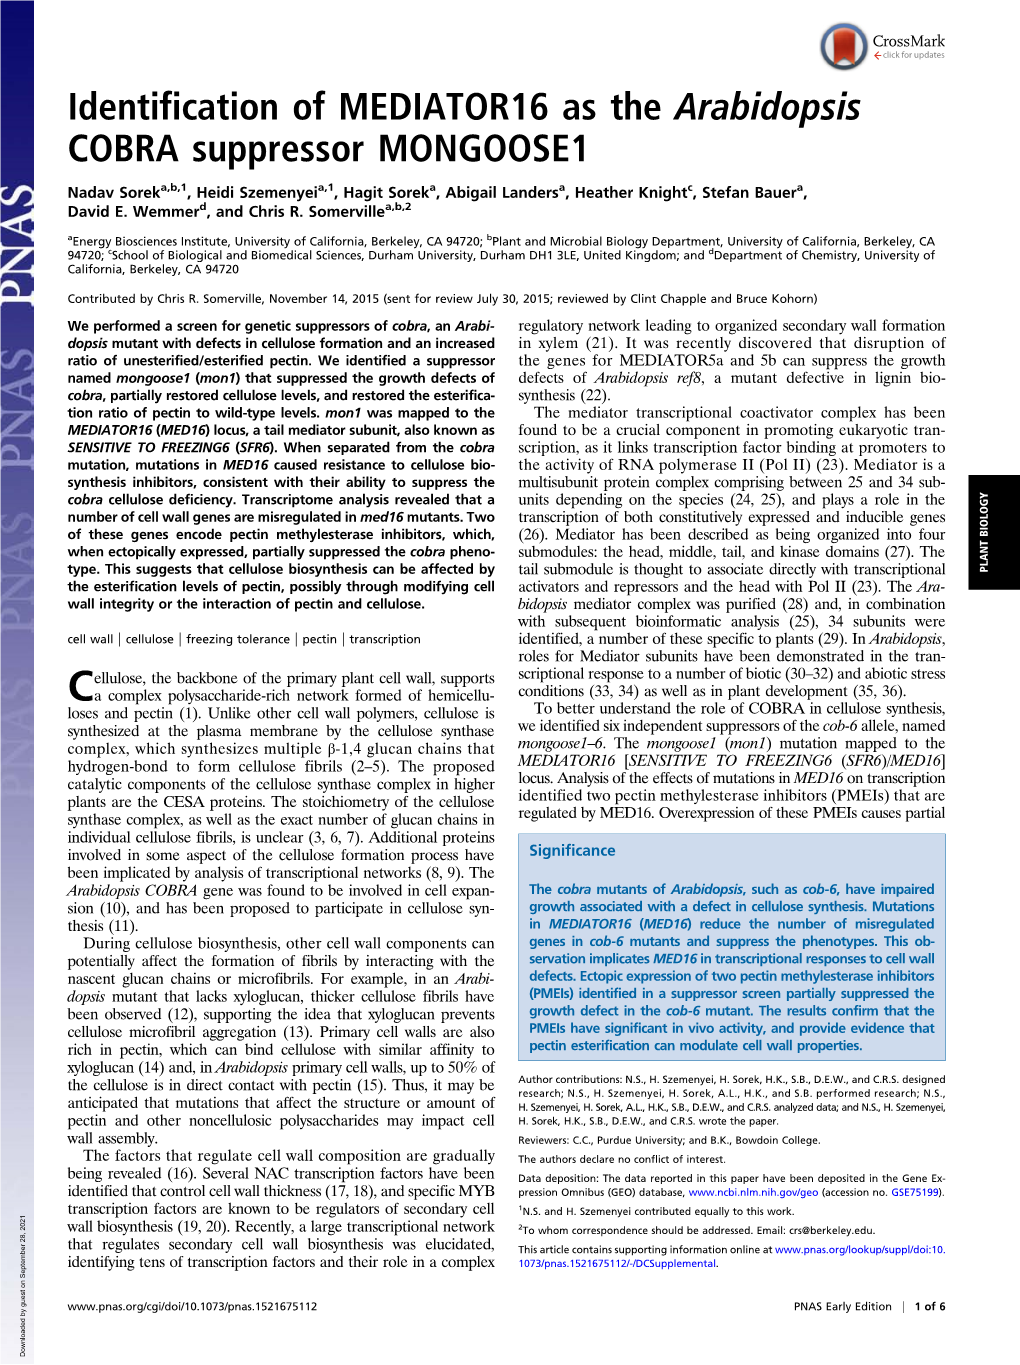 Identification of MEDIATOR16 As the Arabidopsis COBRA Suppressor MONGOOSE1